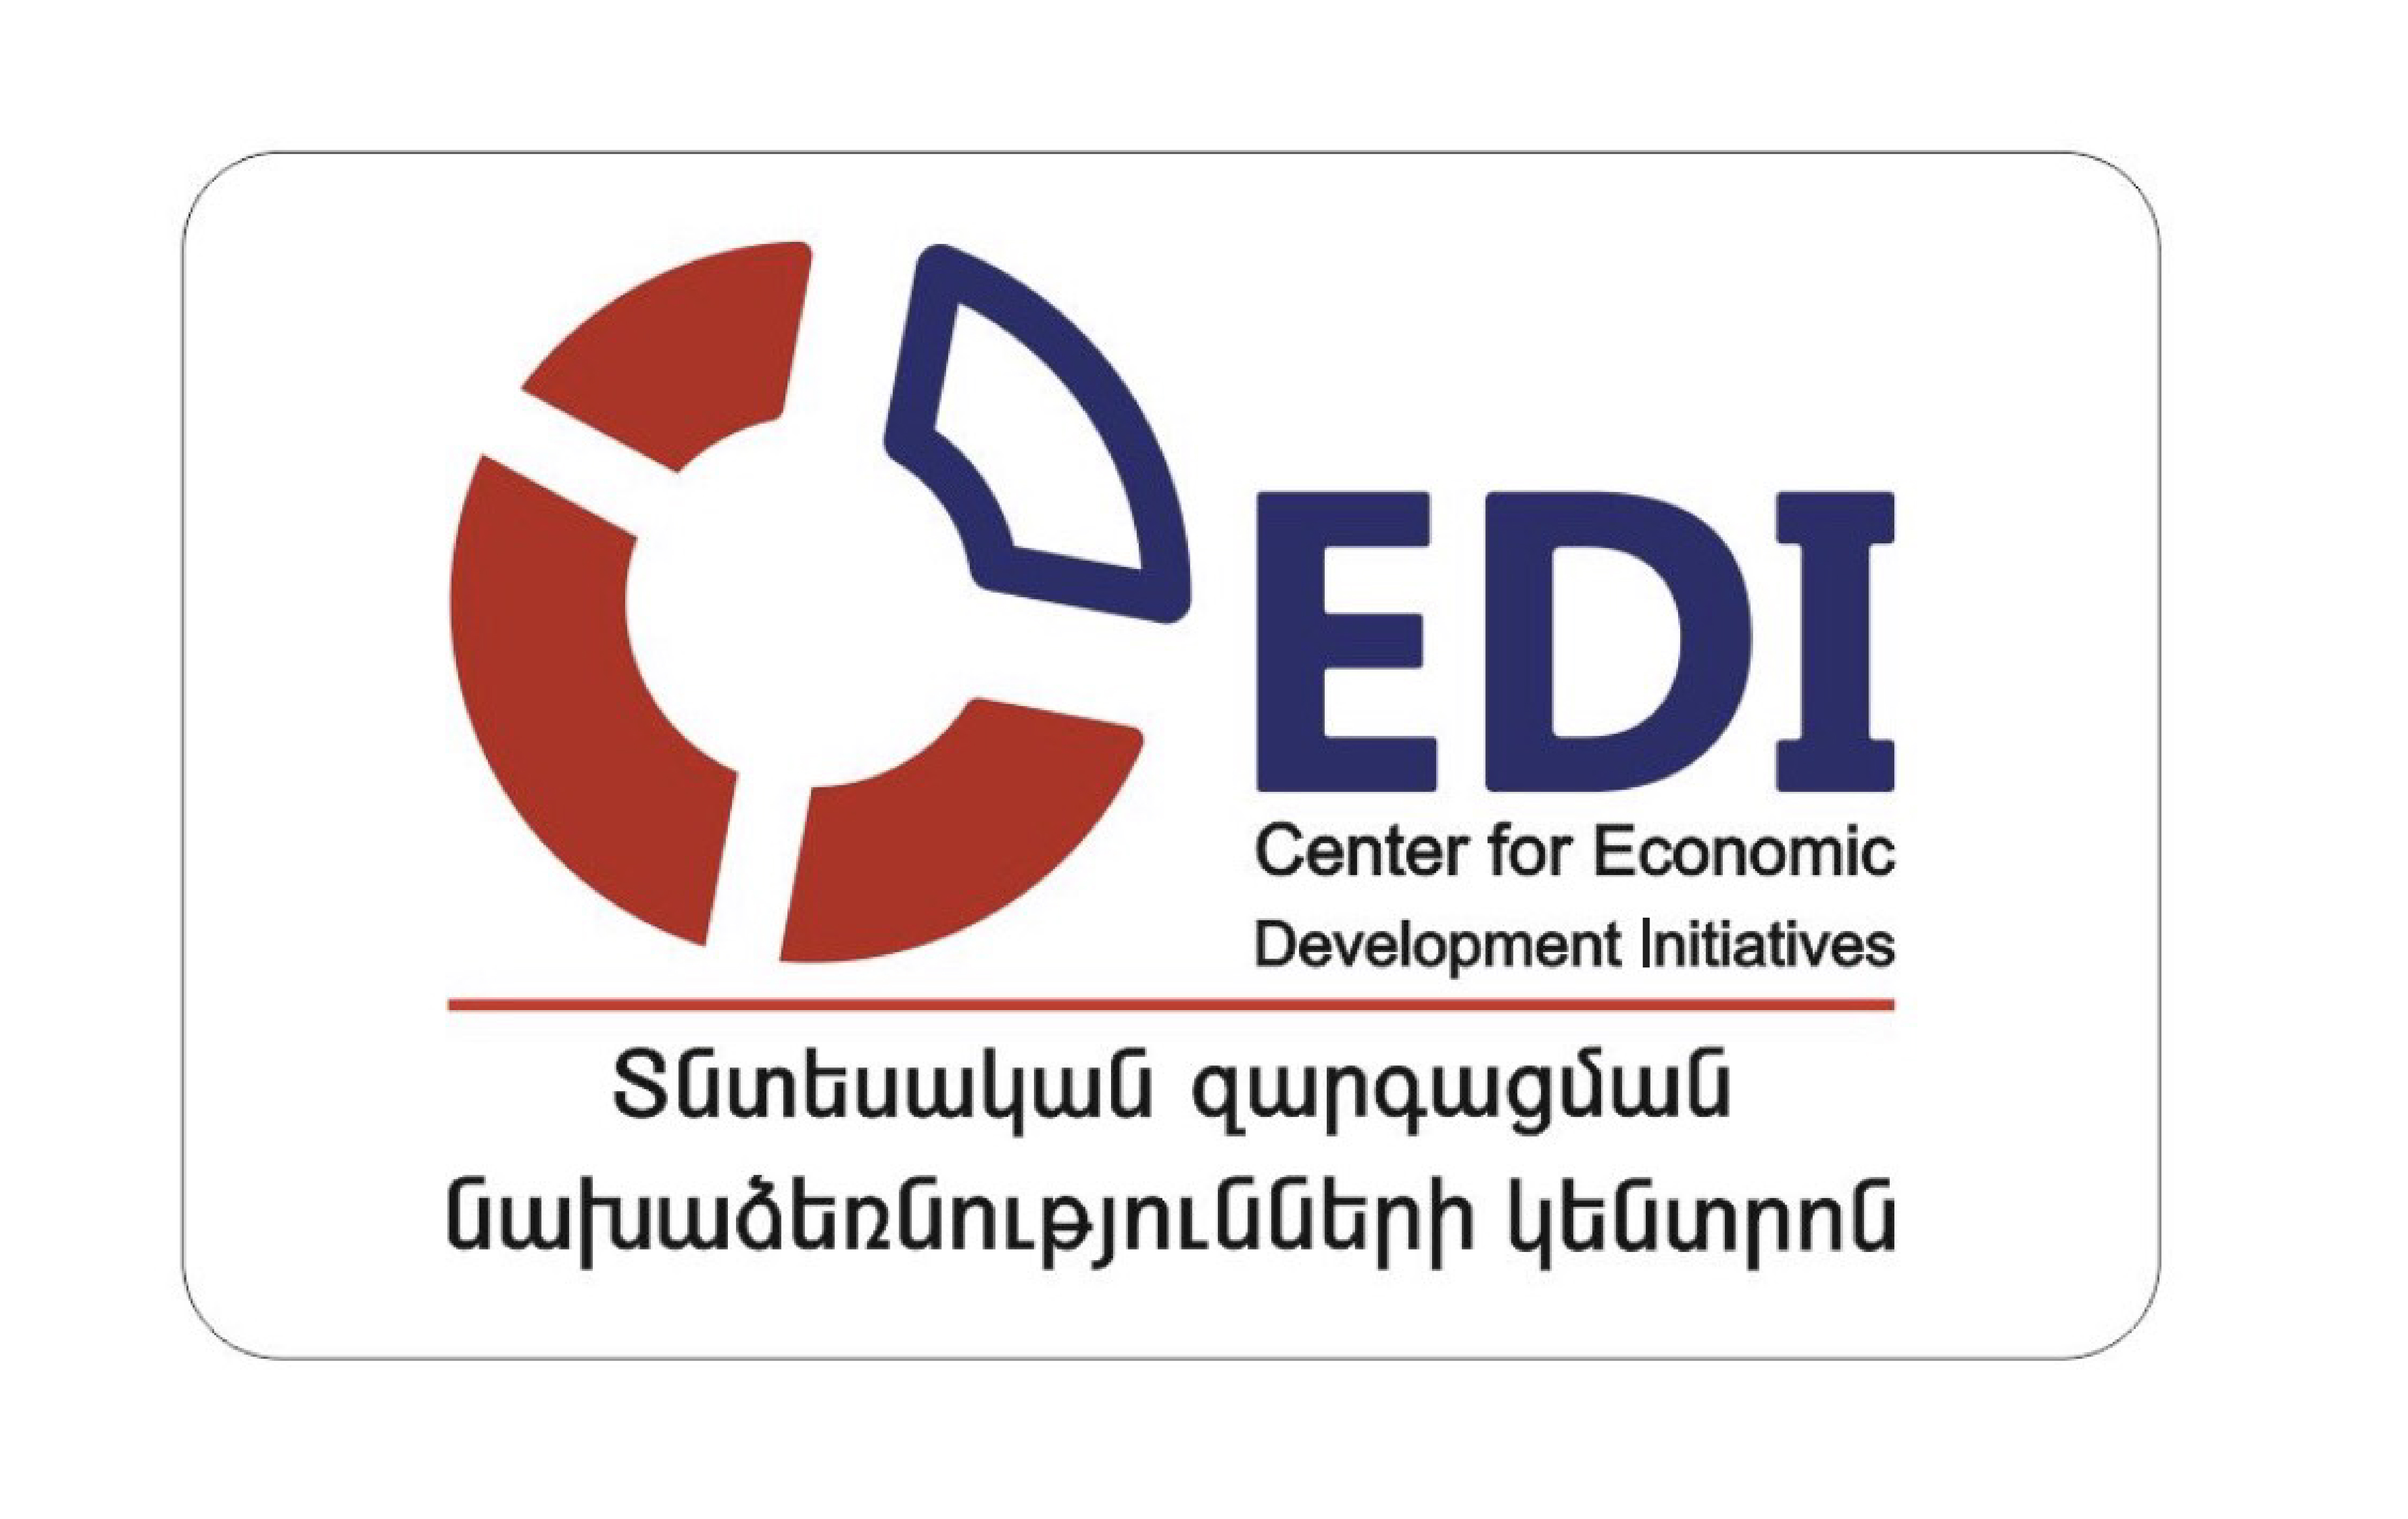 Center for Economic Development Initiatives